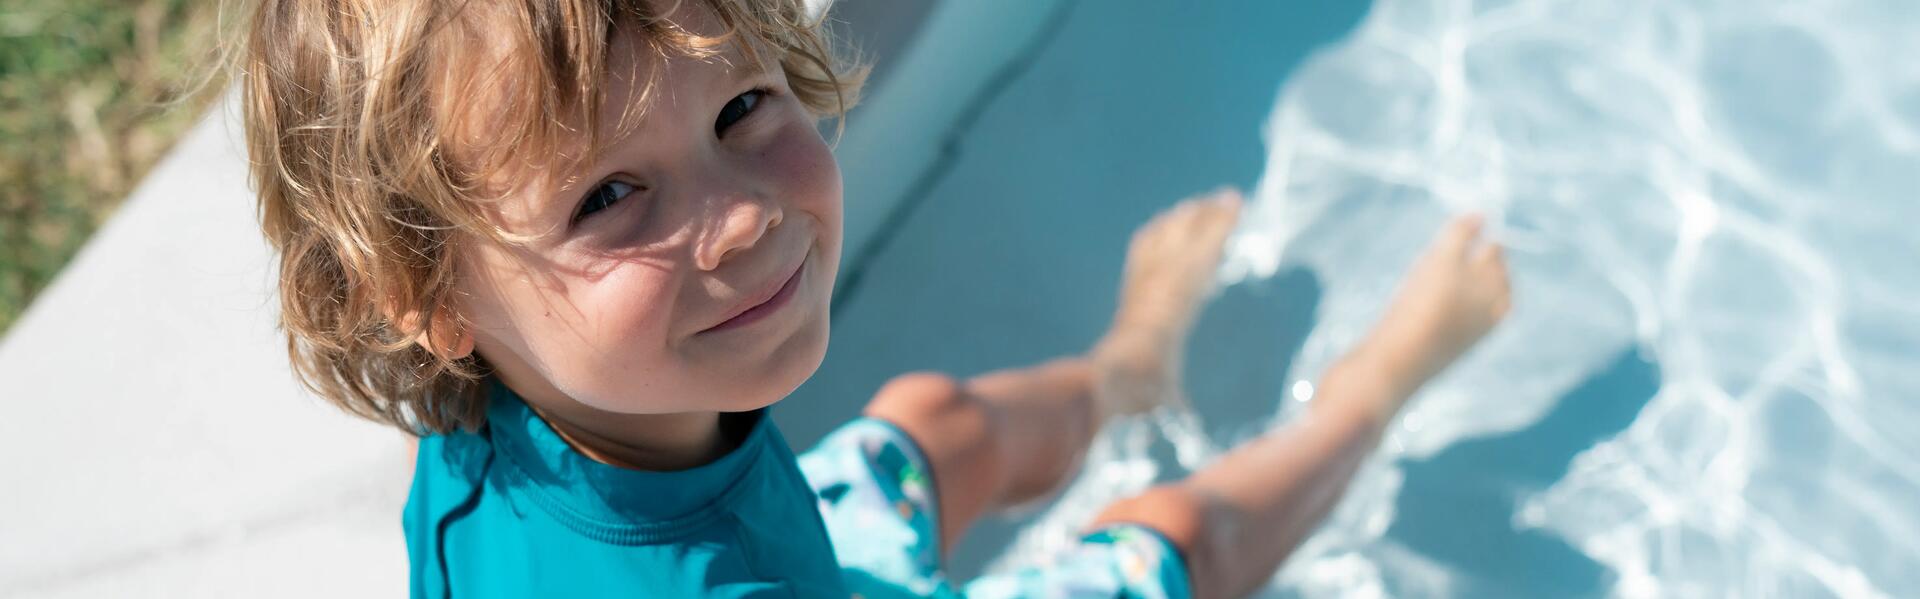 Kind mit UV-Shirt am Pool